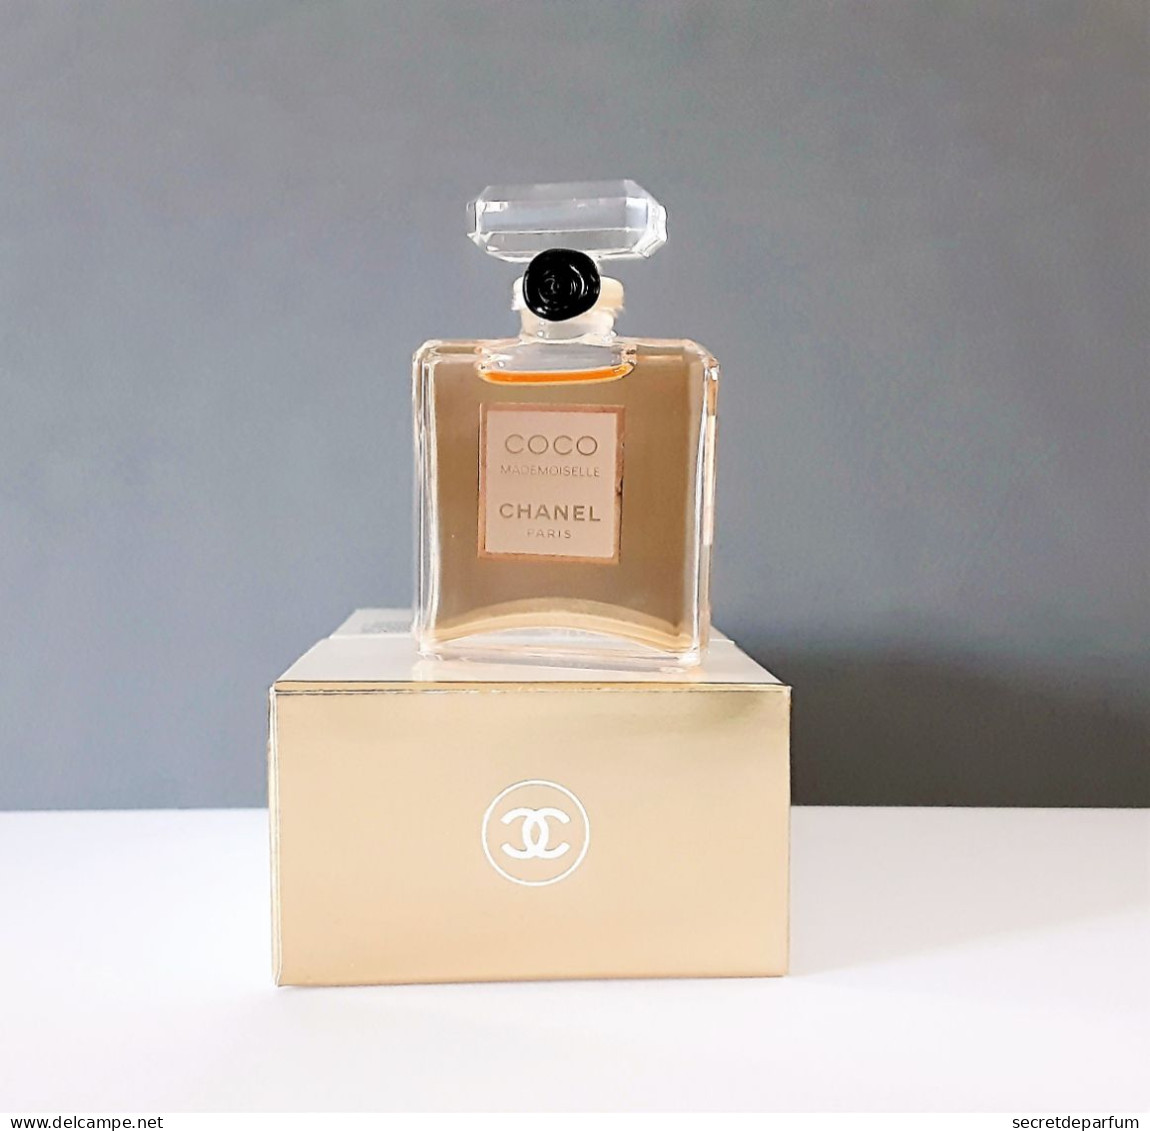 Flacon  COCO MADEMOISELLE De CHANEL  Parfum  7.5 Ml   Neuf  + BOITE - Femme